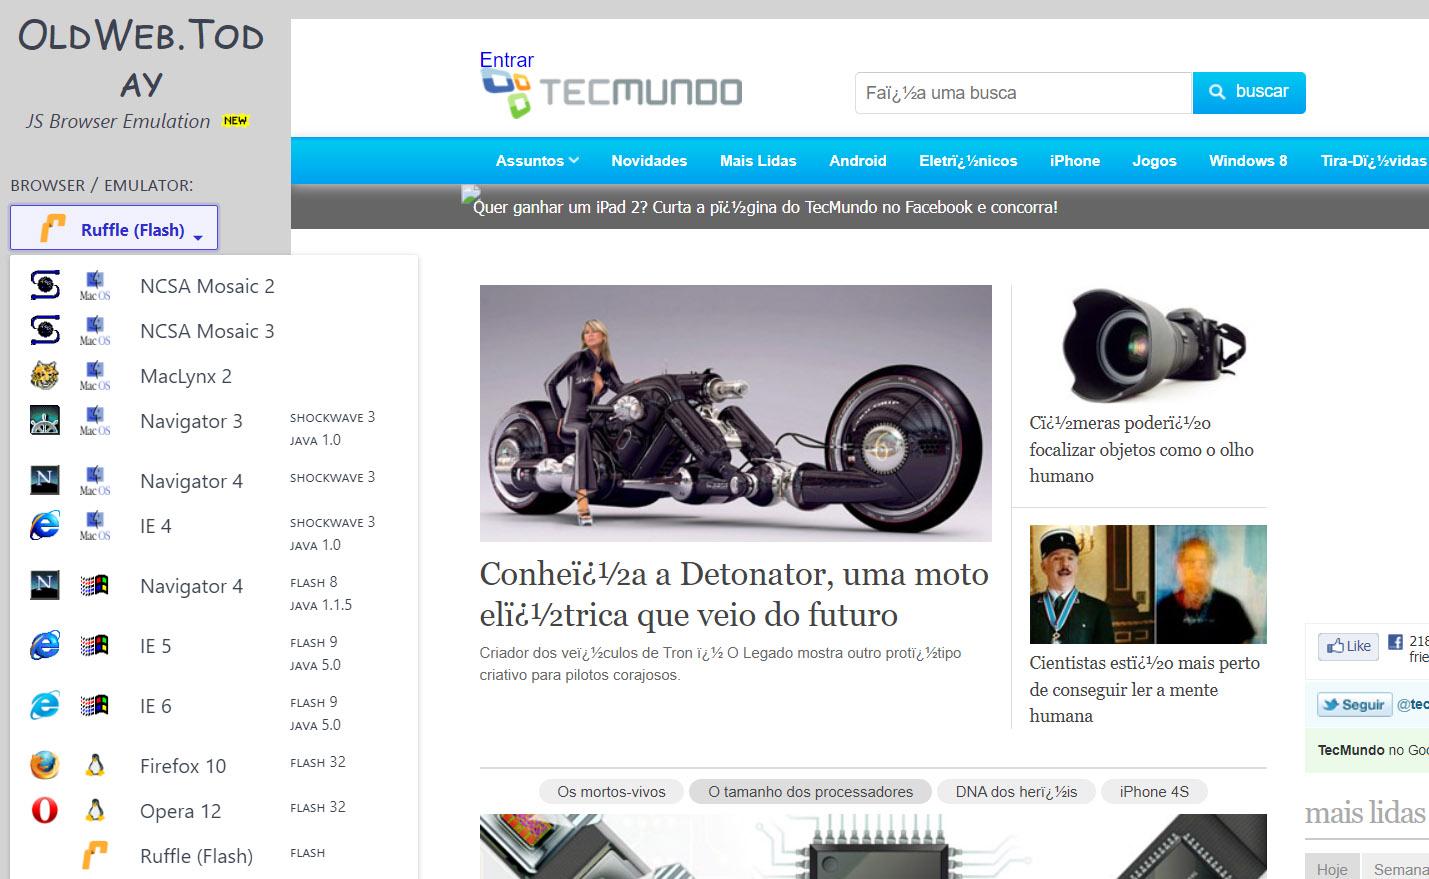 TecMundo website on November 2, 2011 (Source: Oldweb.today/Reproduction)